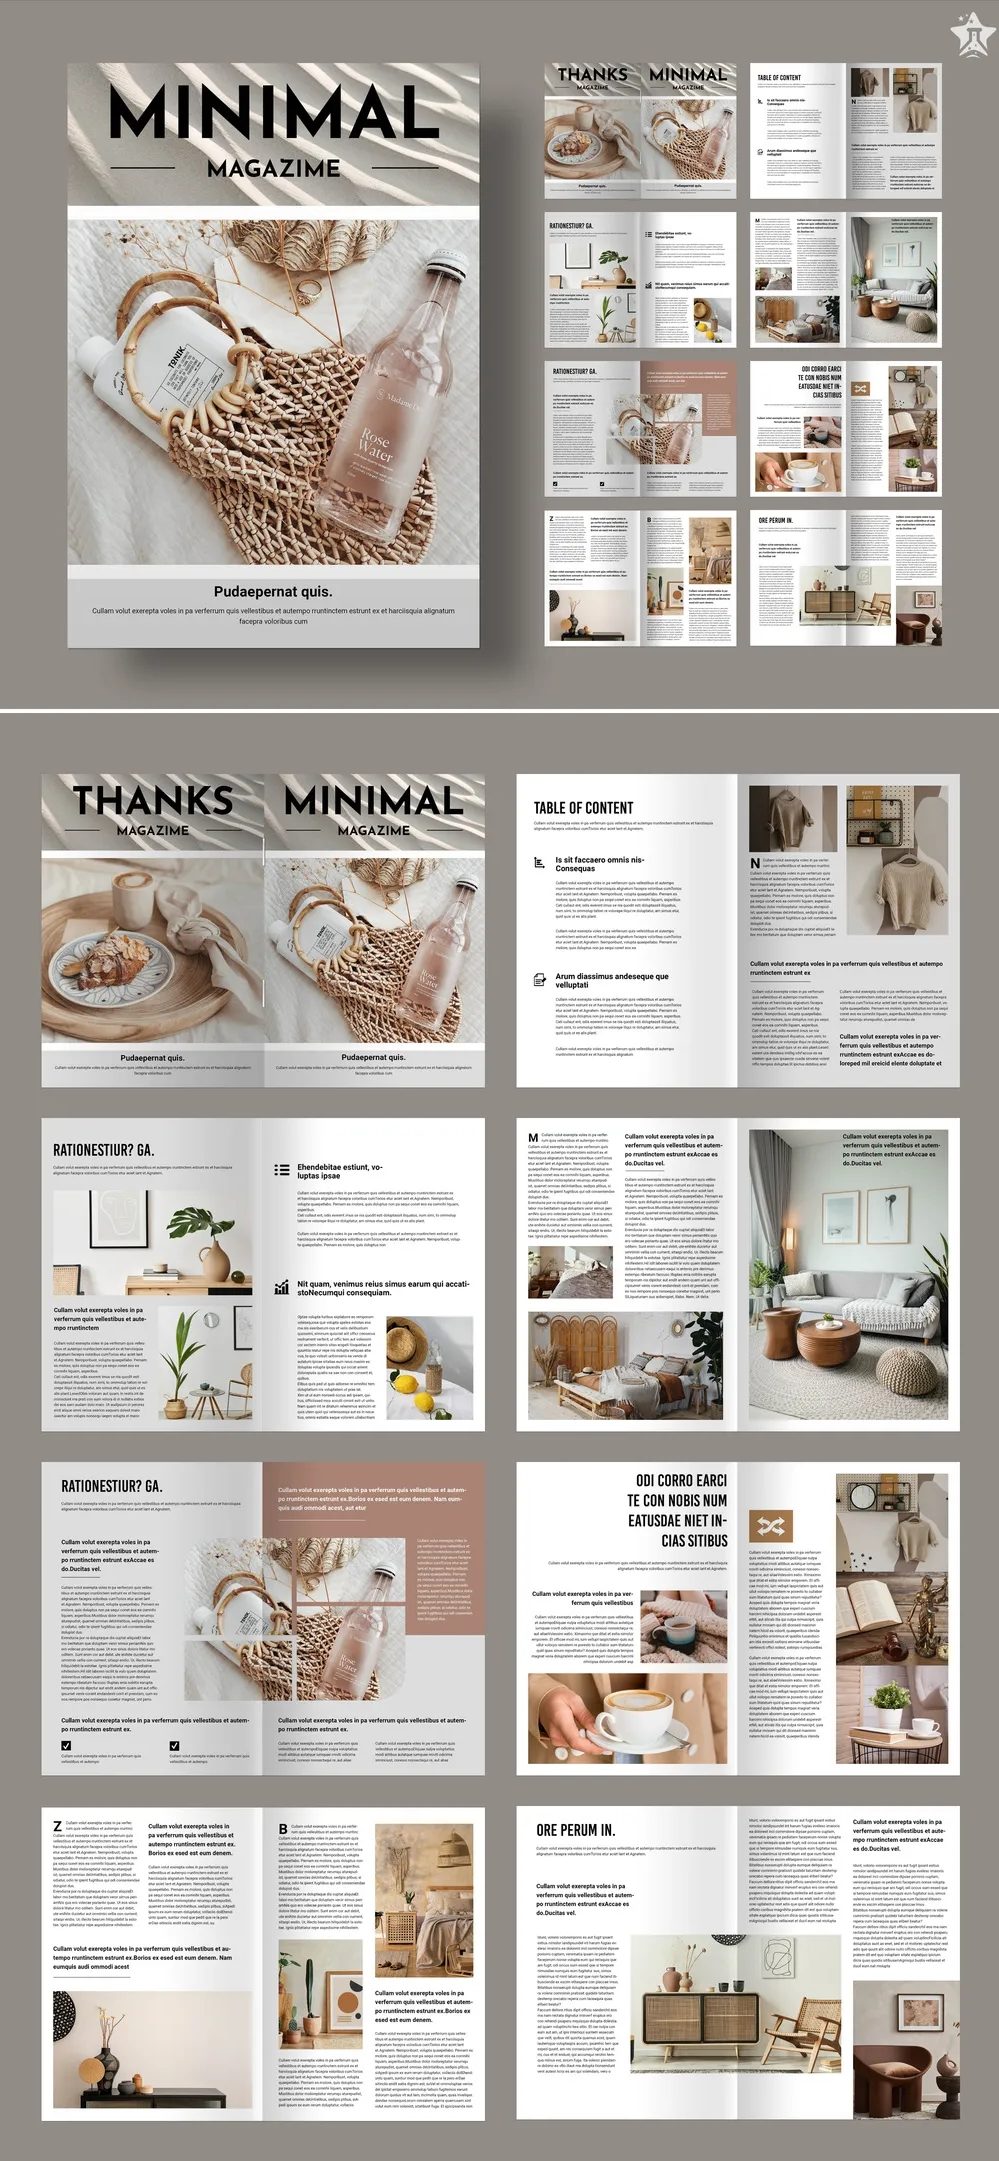 Adobestock - Minimal Magazine 714743583